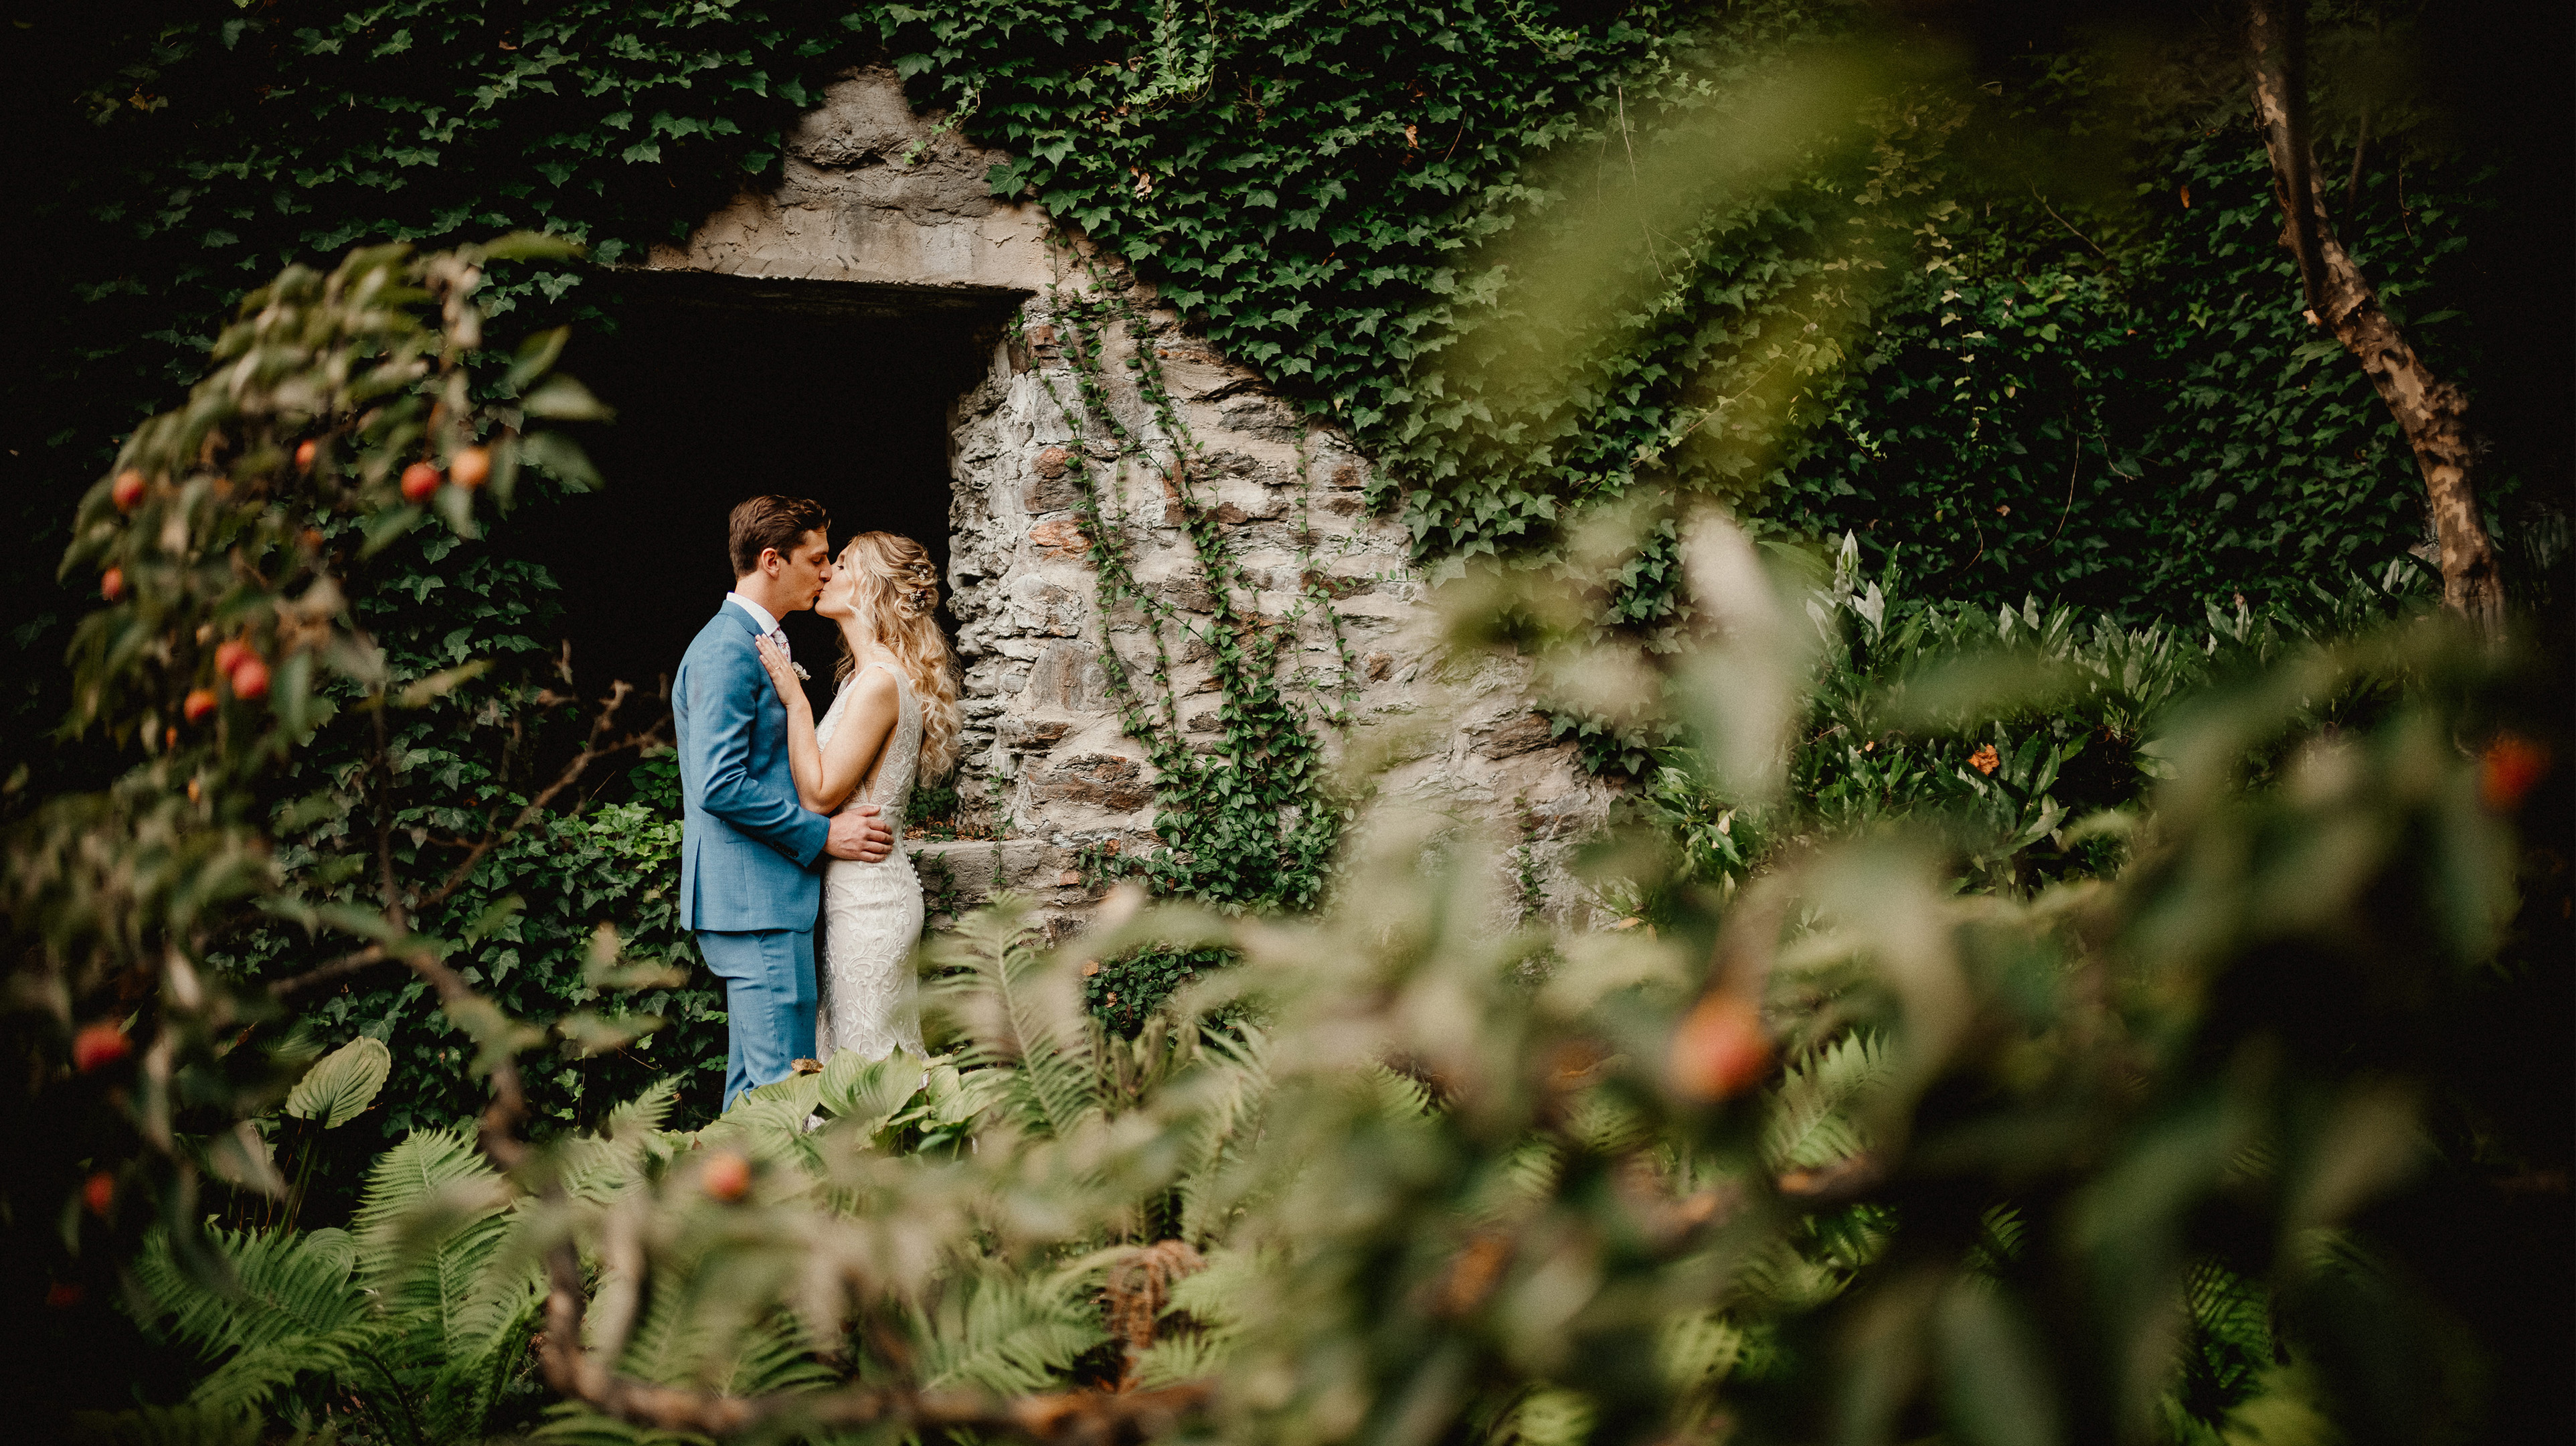 Bride and Groom kissing in outdoor stone doorway covered in vines.